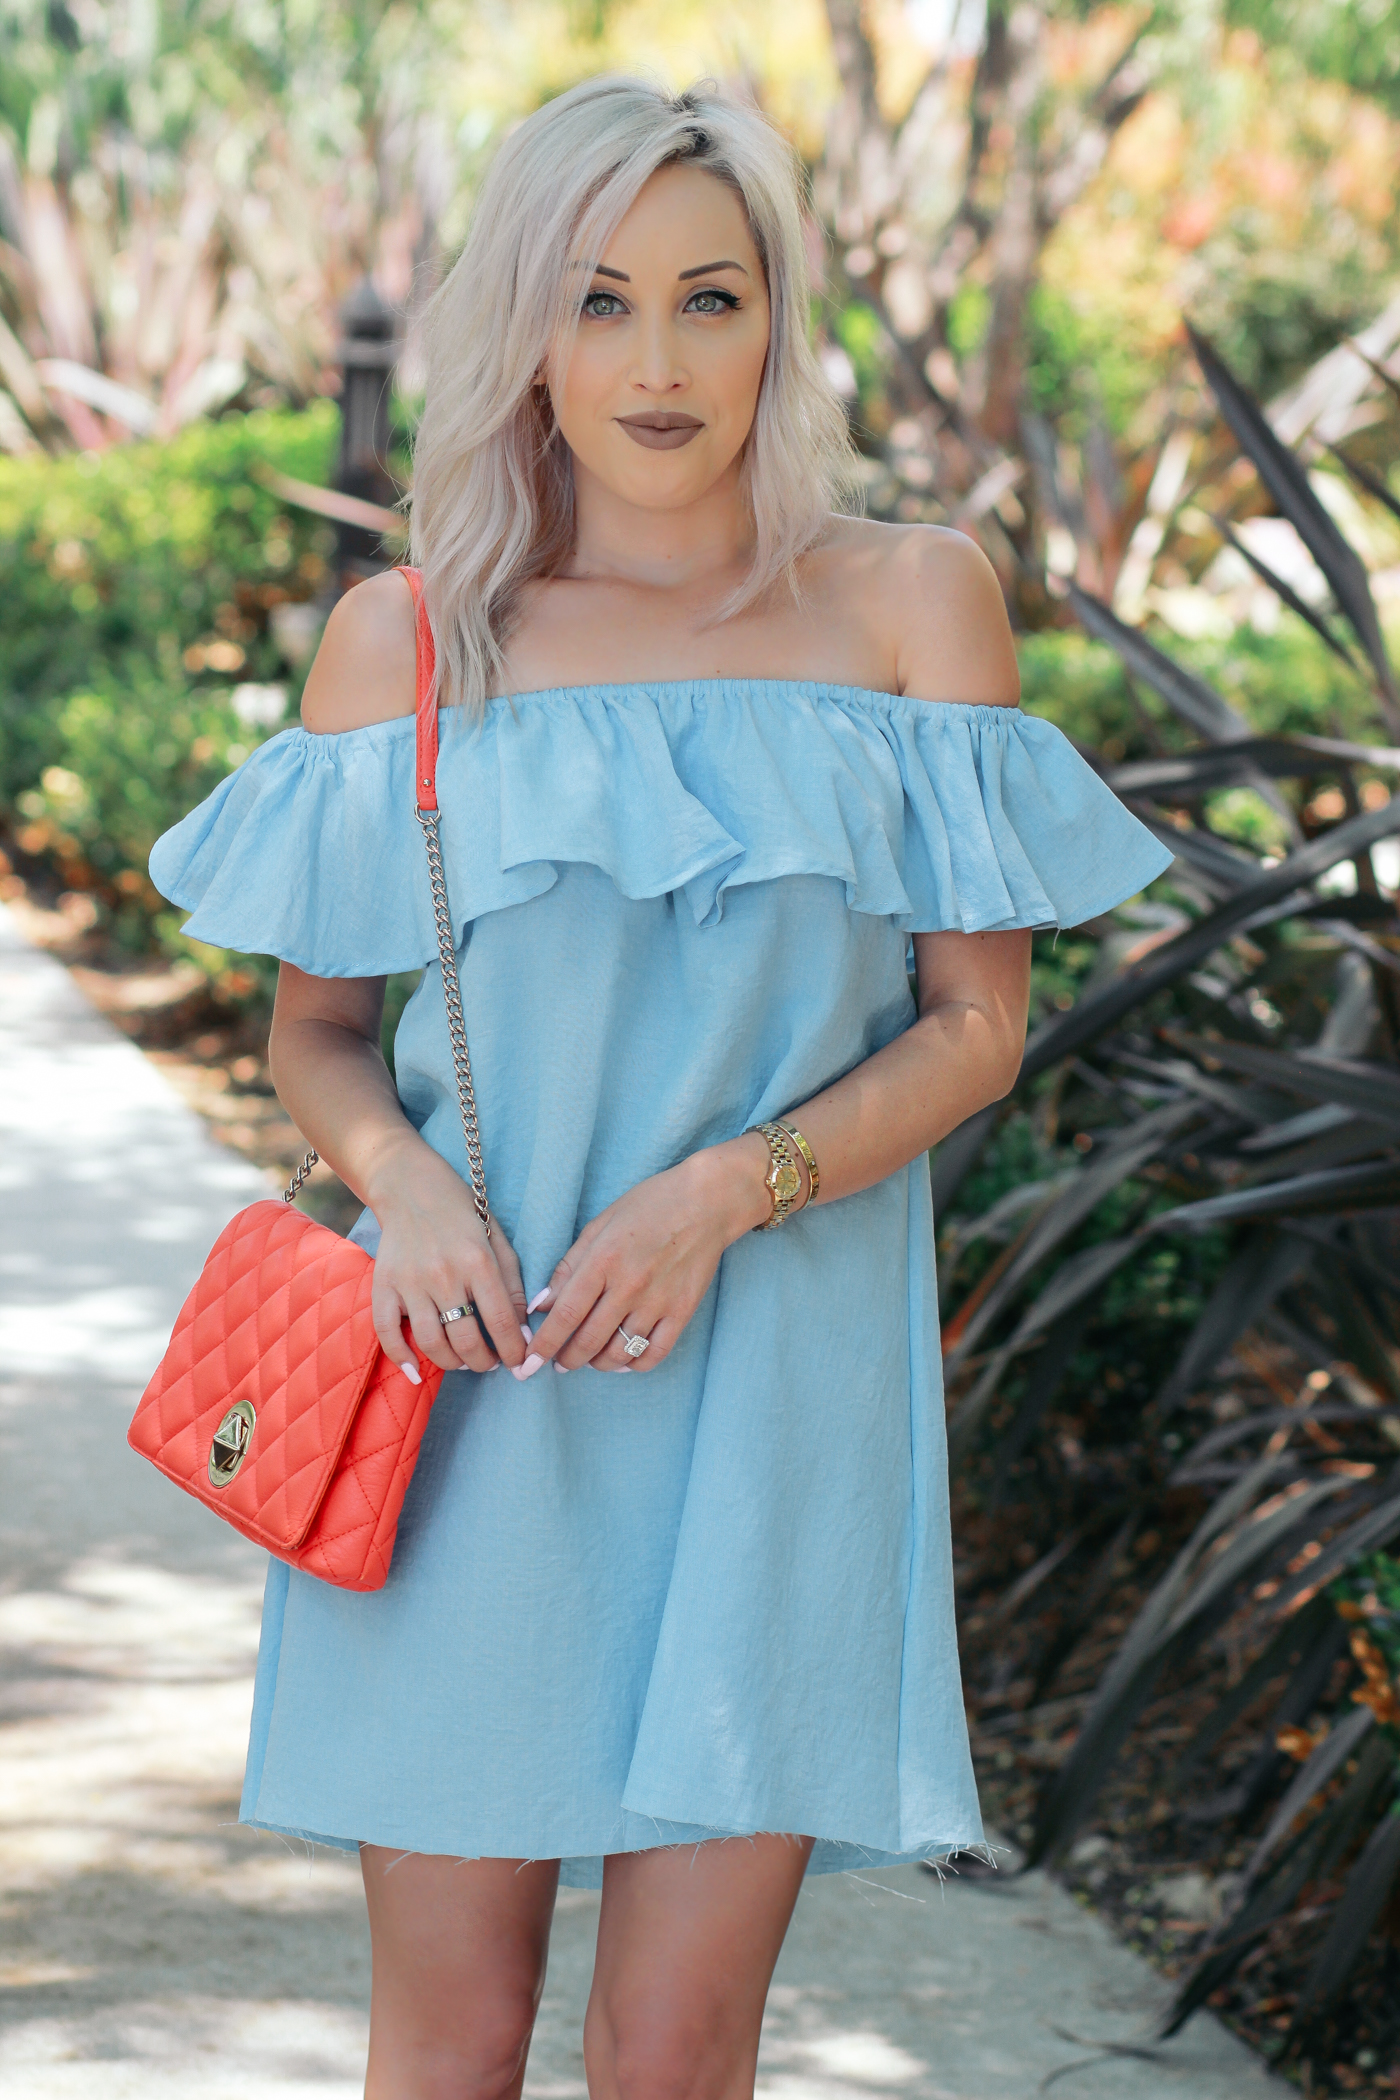 Blondie in the City | Light Blue Ruffle Summer Dress | Coral Kate Spade Bag | @corkysfootwear sandals